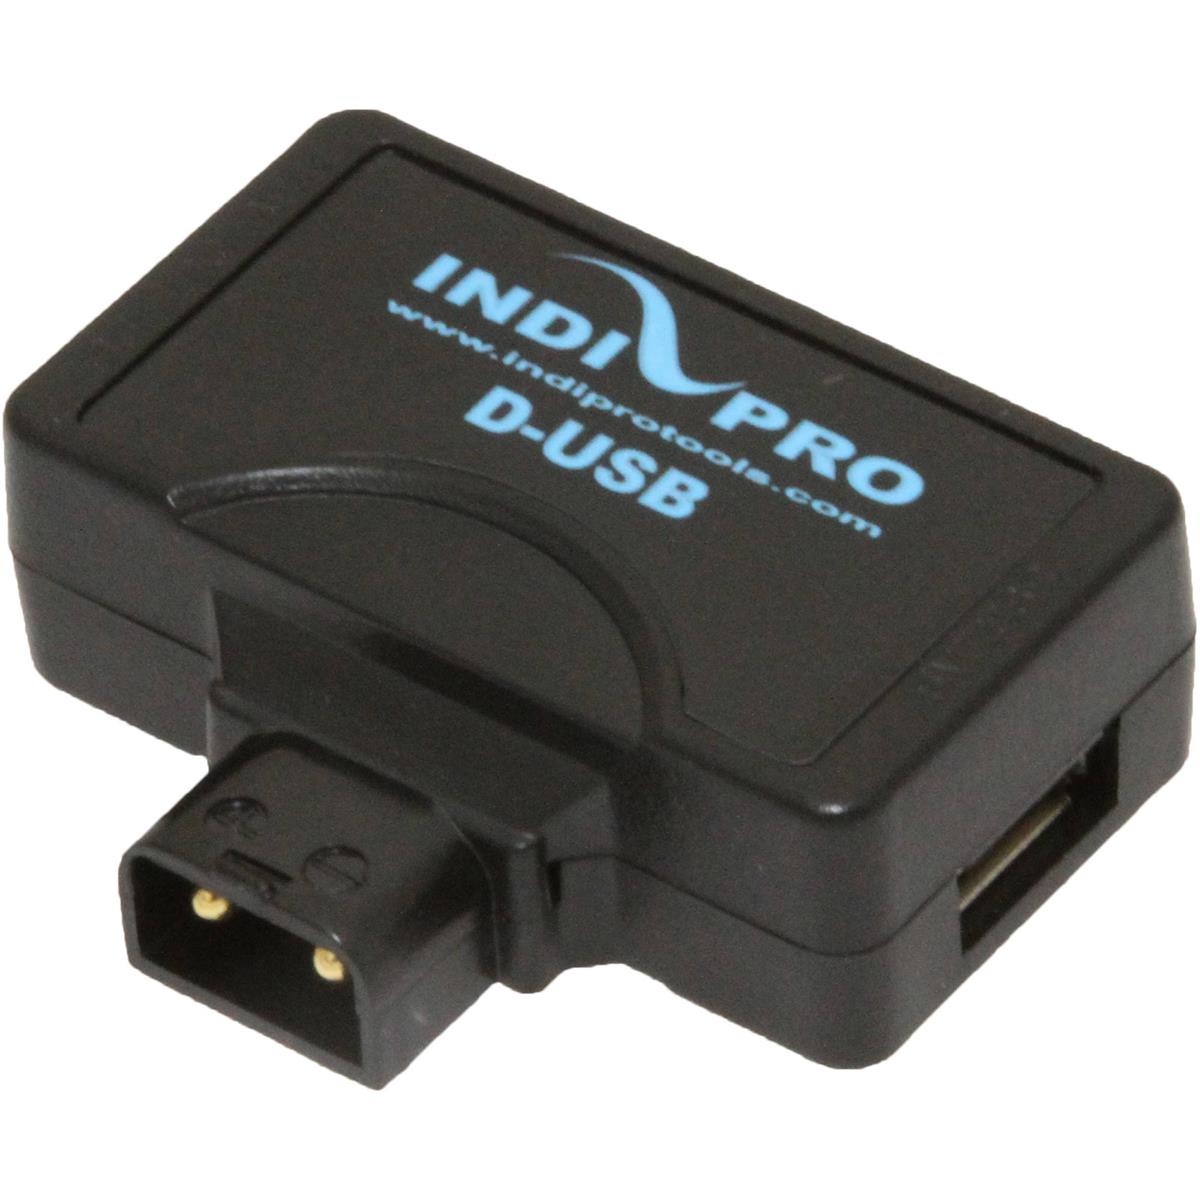 

IndiPRO D-USB Adapter